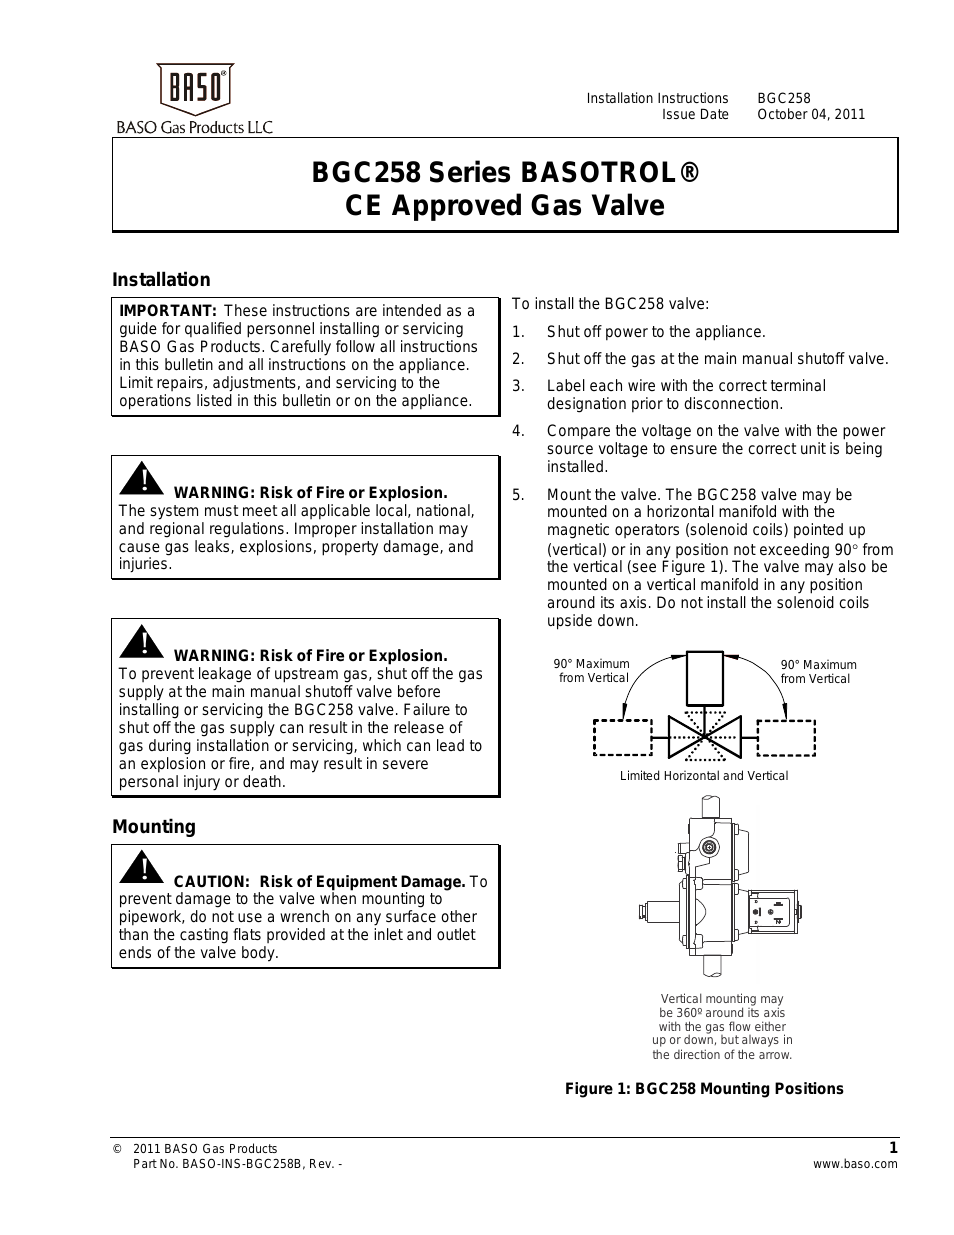 BGC258 Series BASOTROL